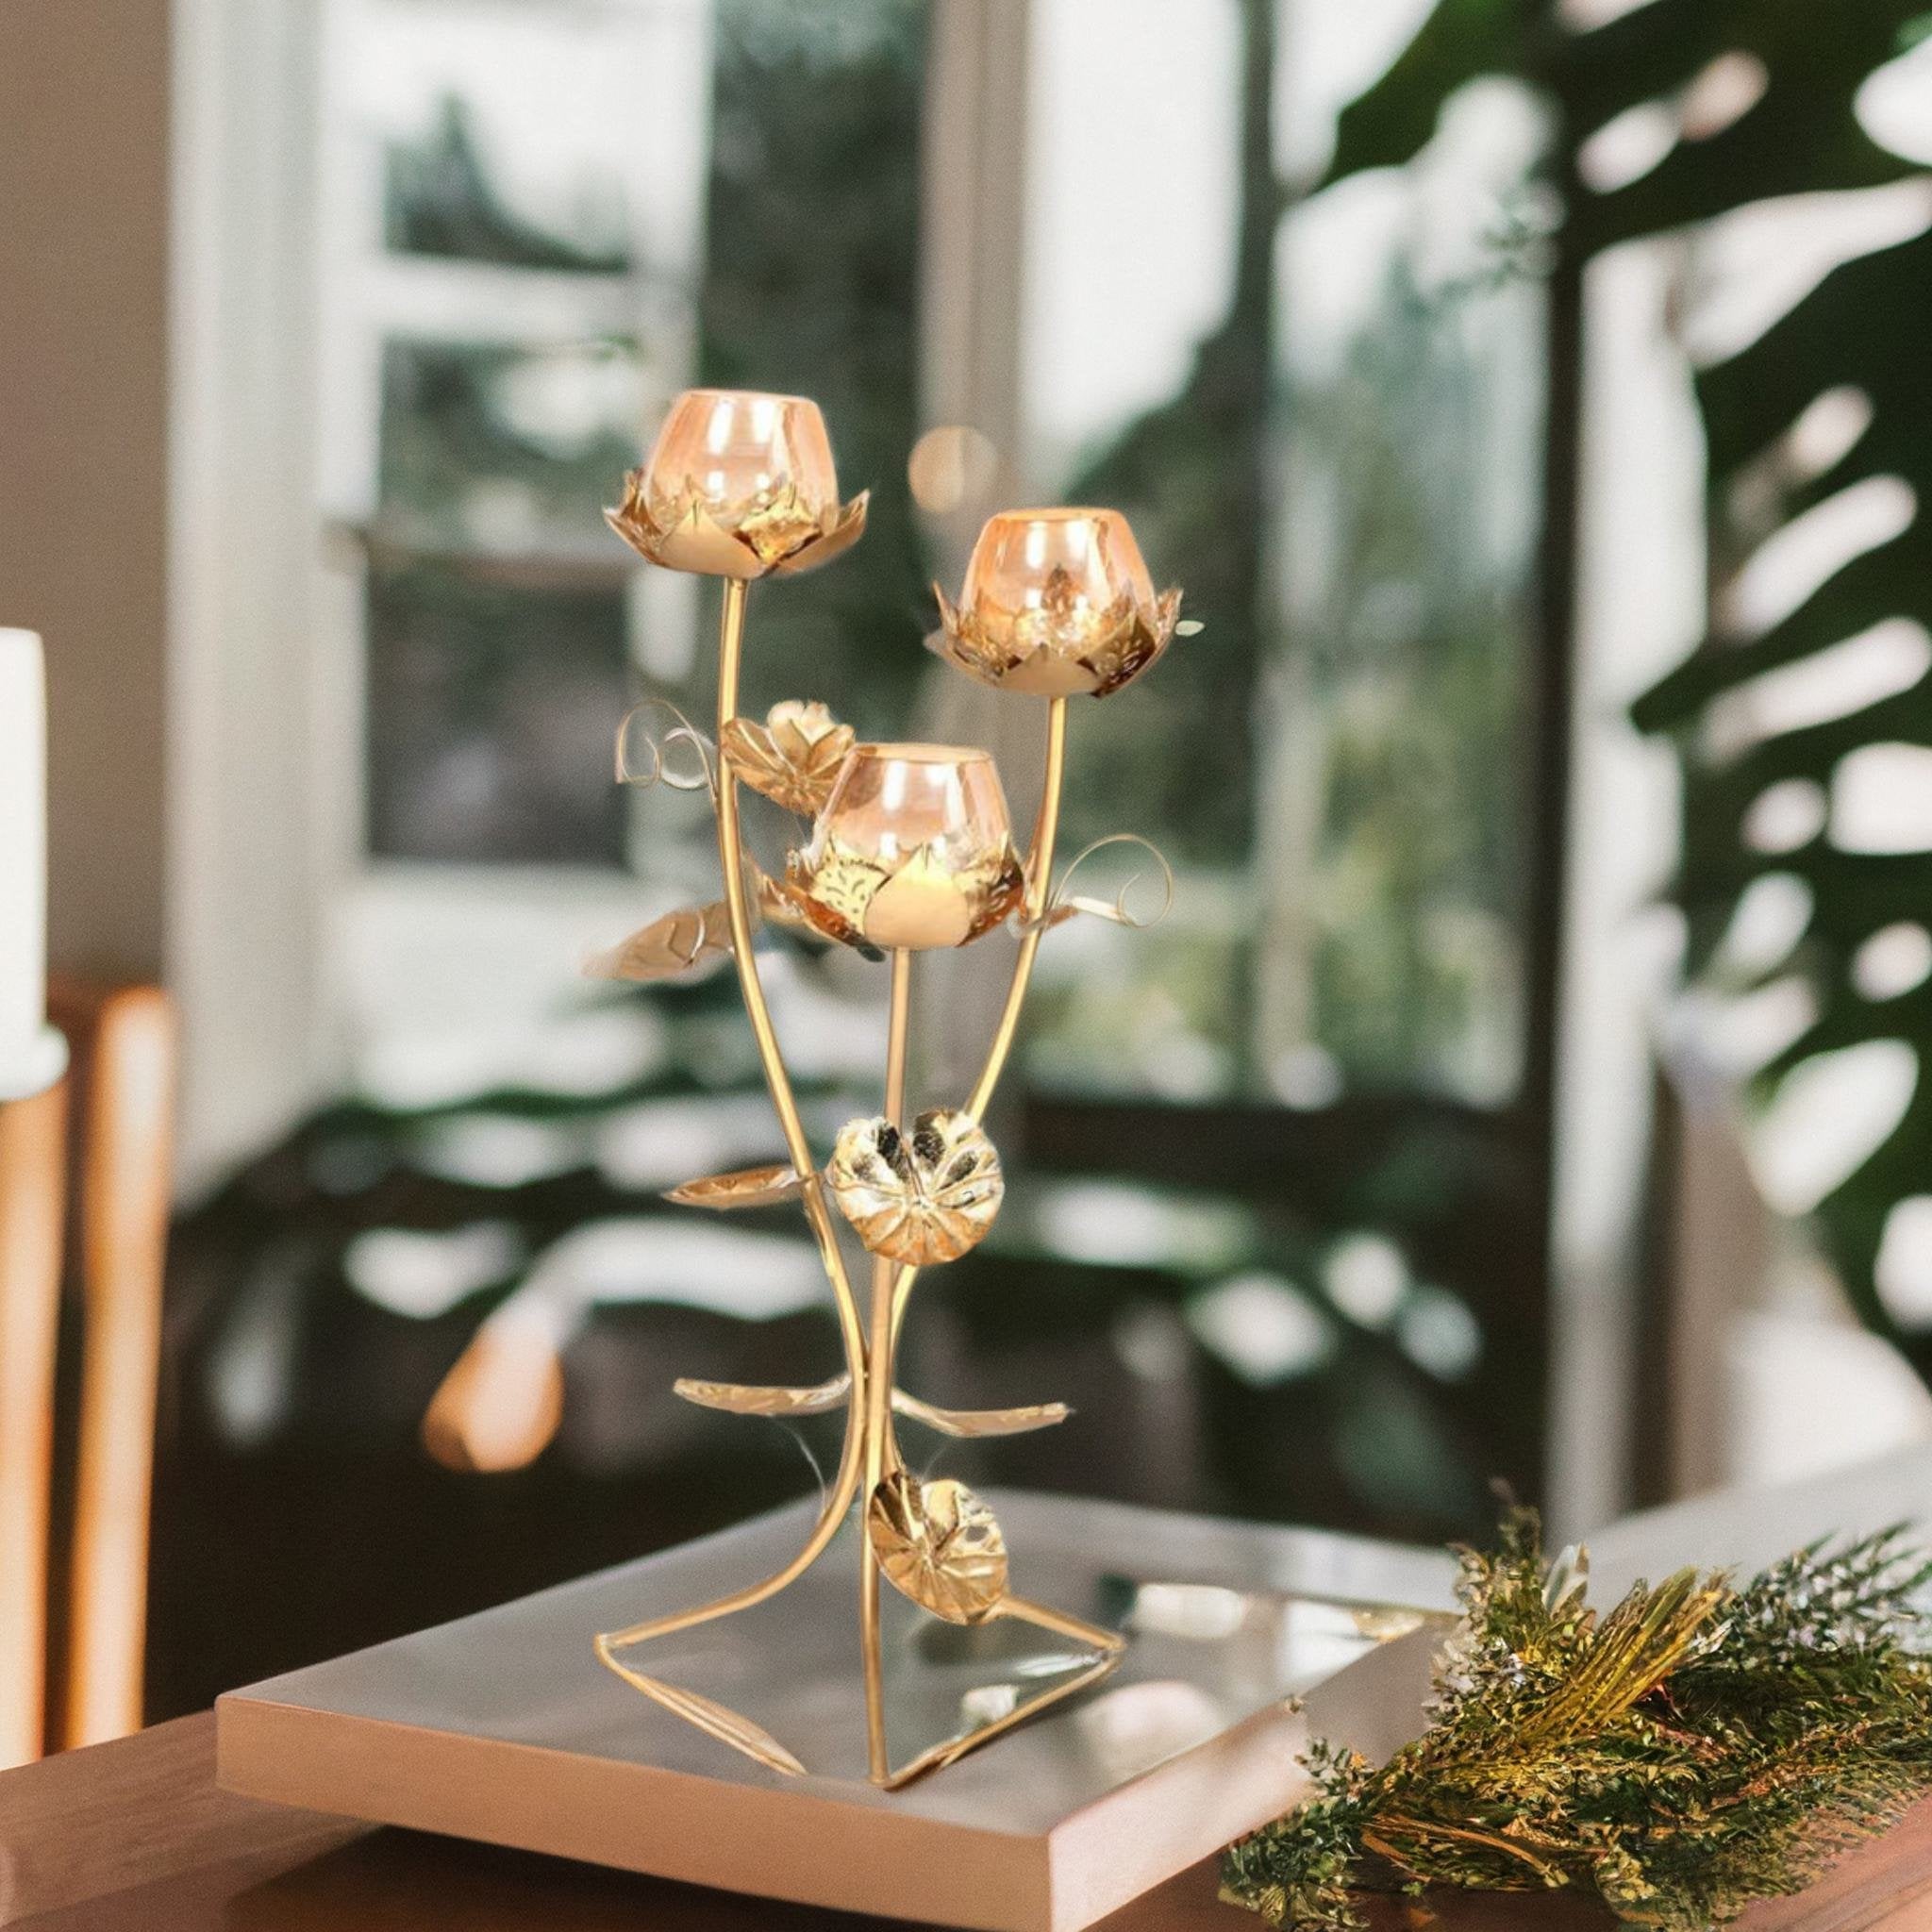 Golden Metal Big Size 7 inch Table Lotus Flower Candle Holder Home  decoration